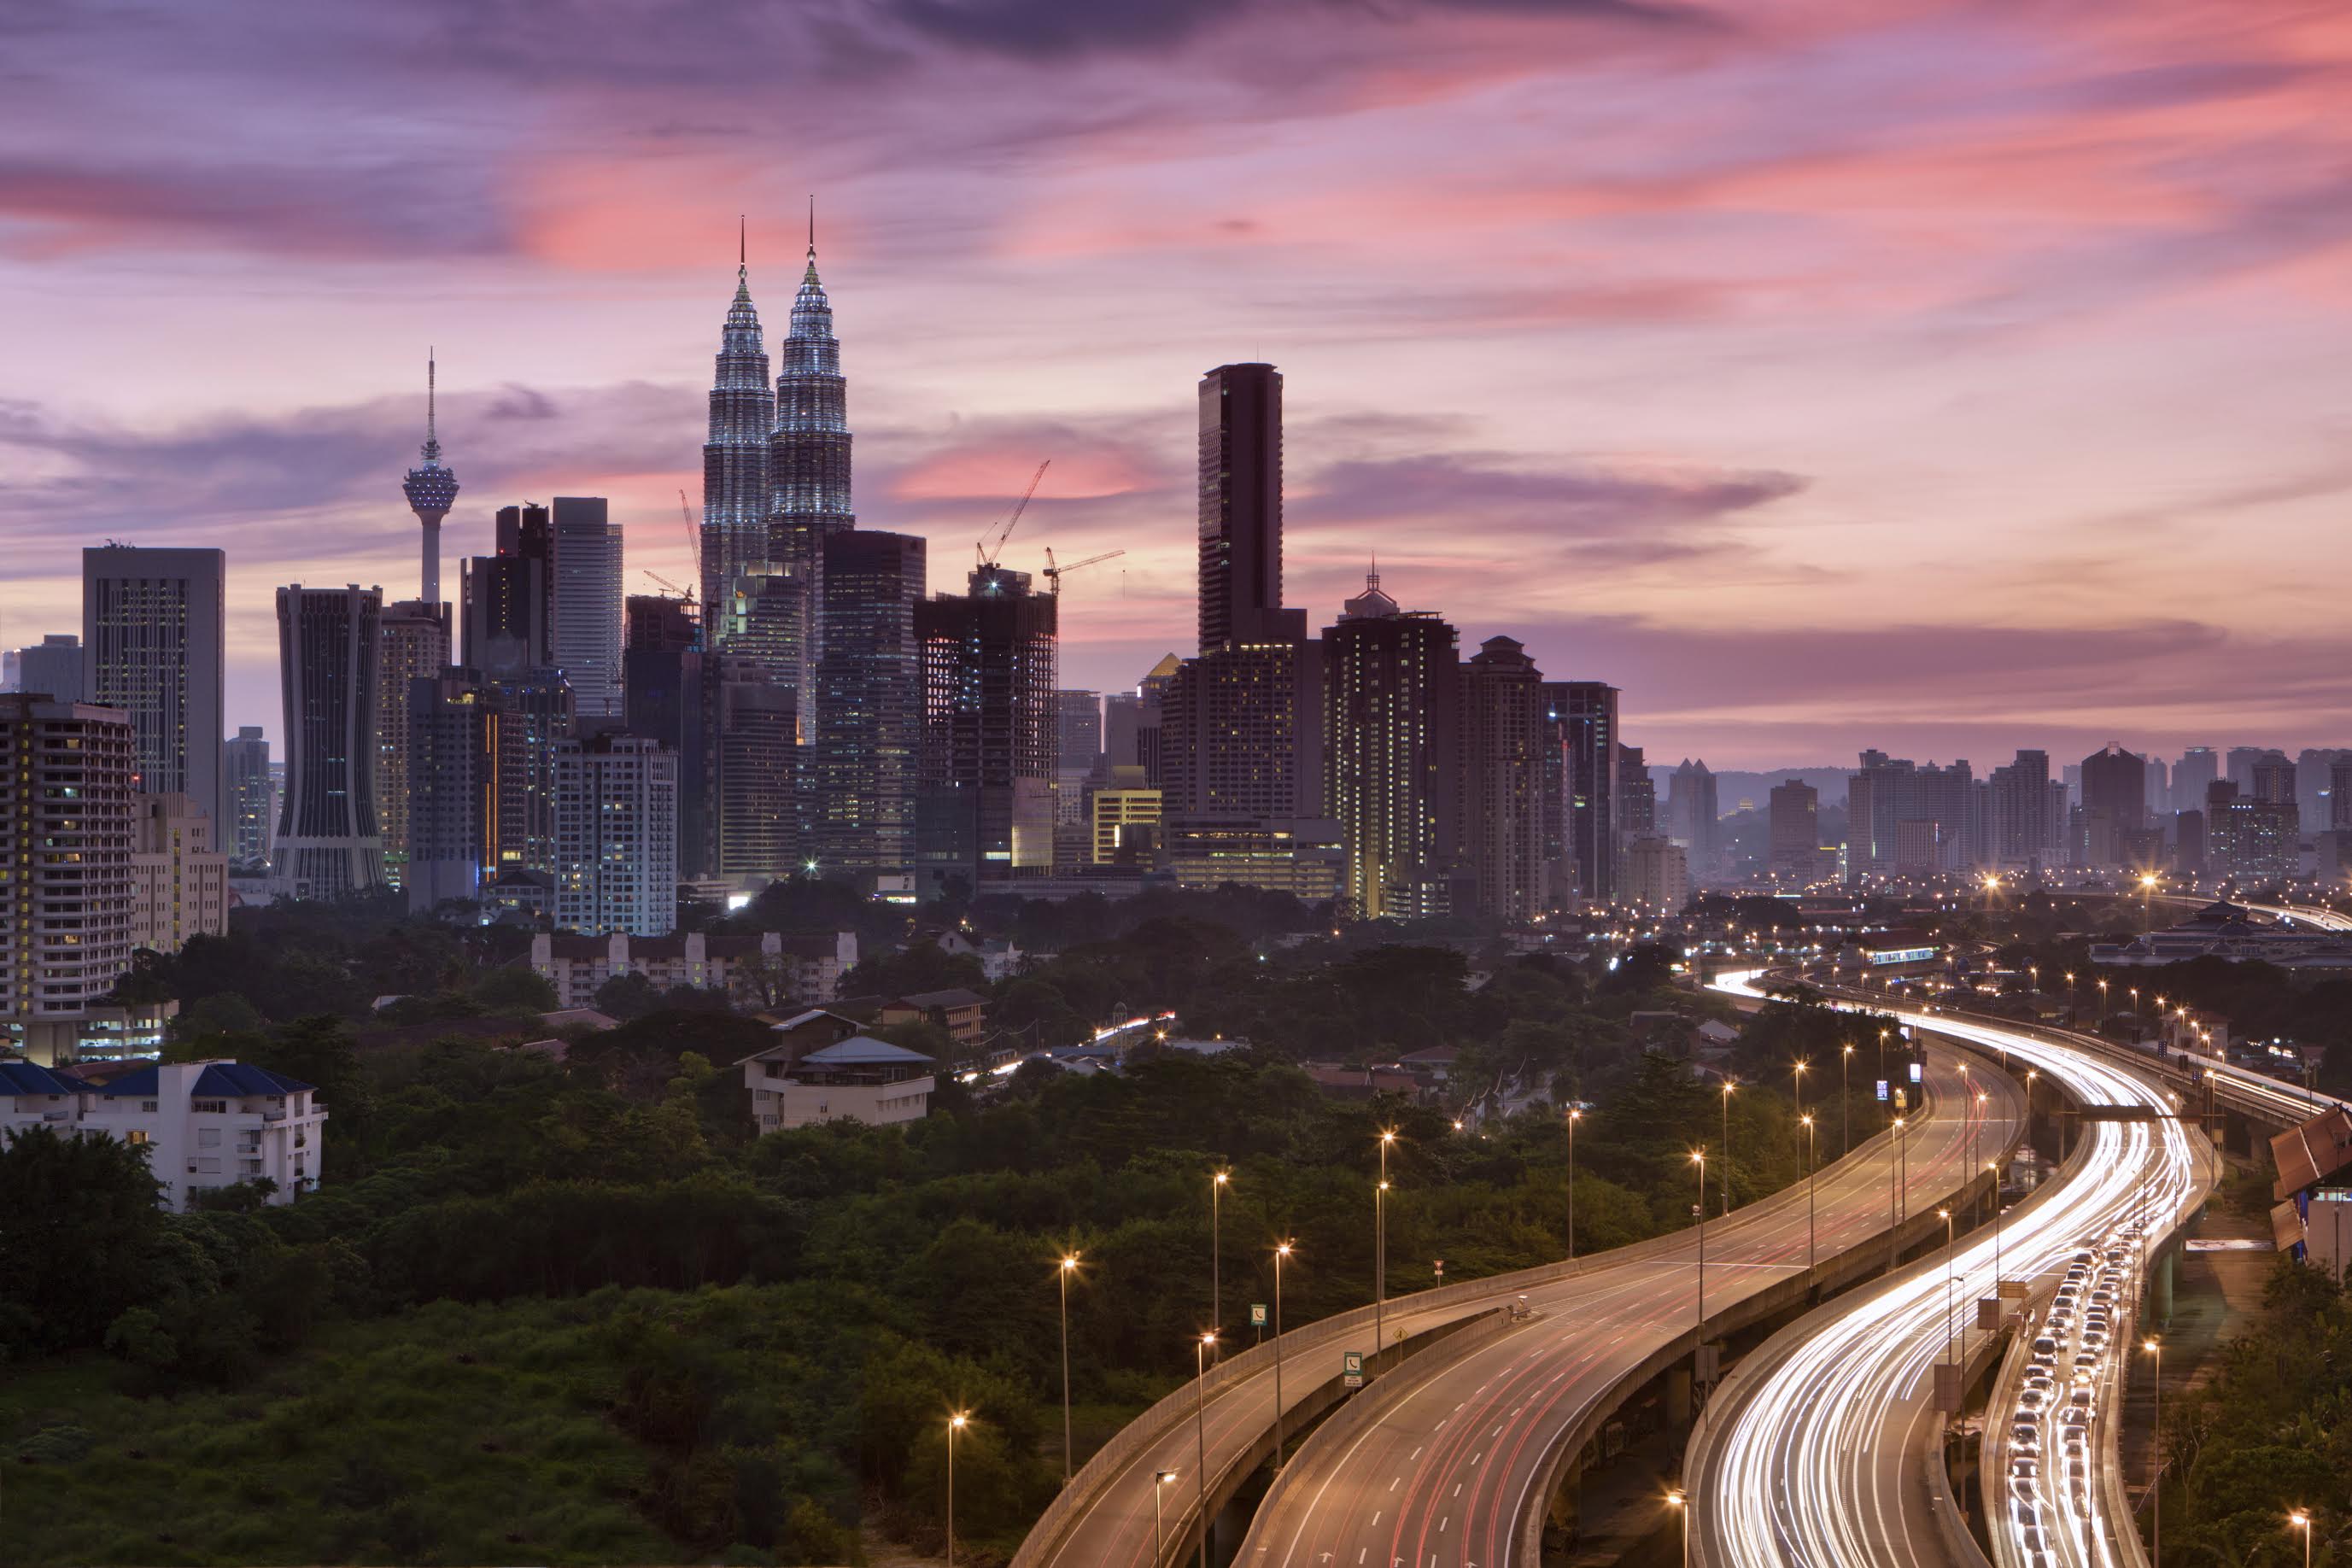 A cityscape of the downtown area of Kuala Lumpur, capital city of Malaysia.